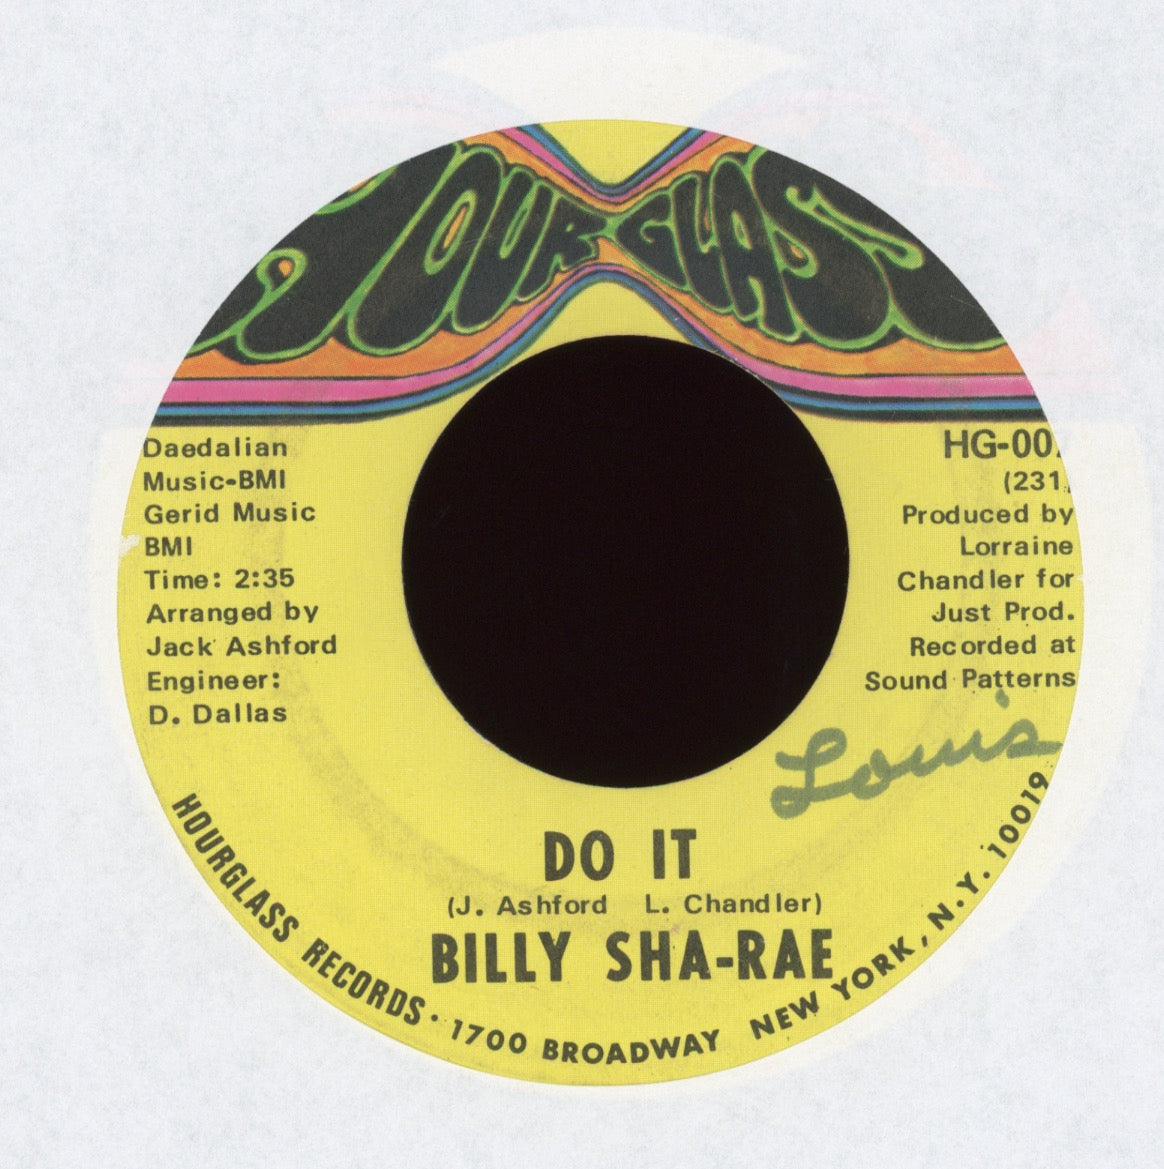 Billy Sha-Rae - Do It on Hourglass